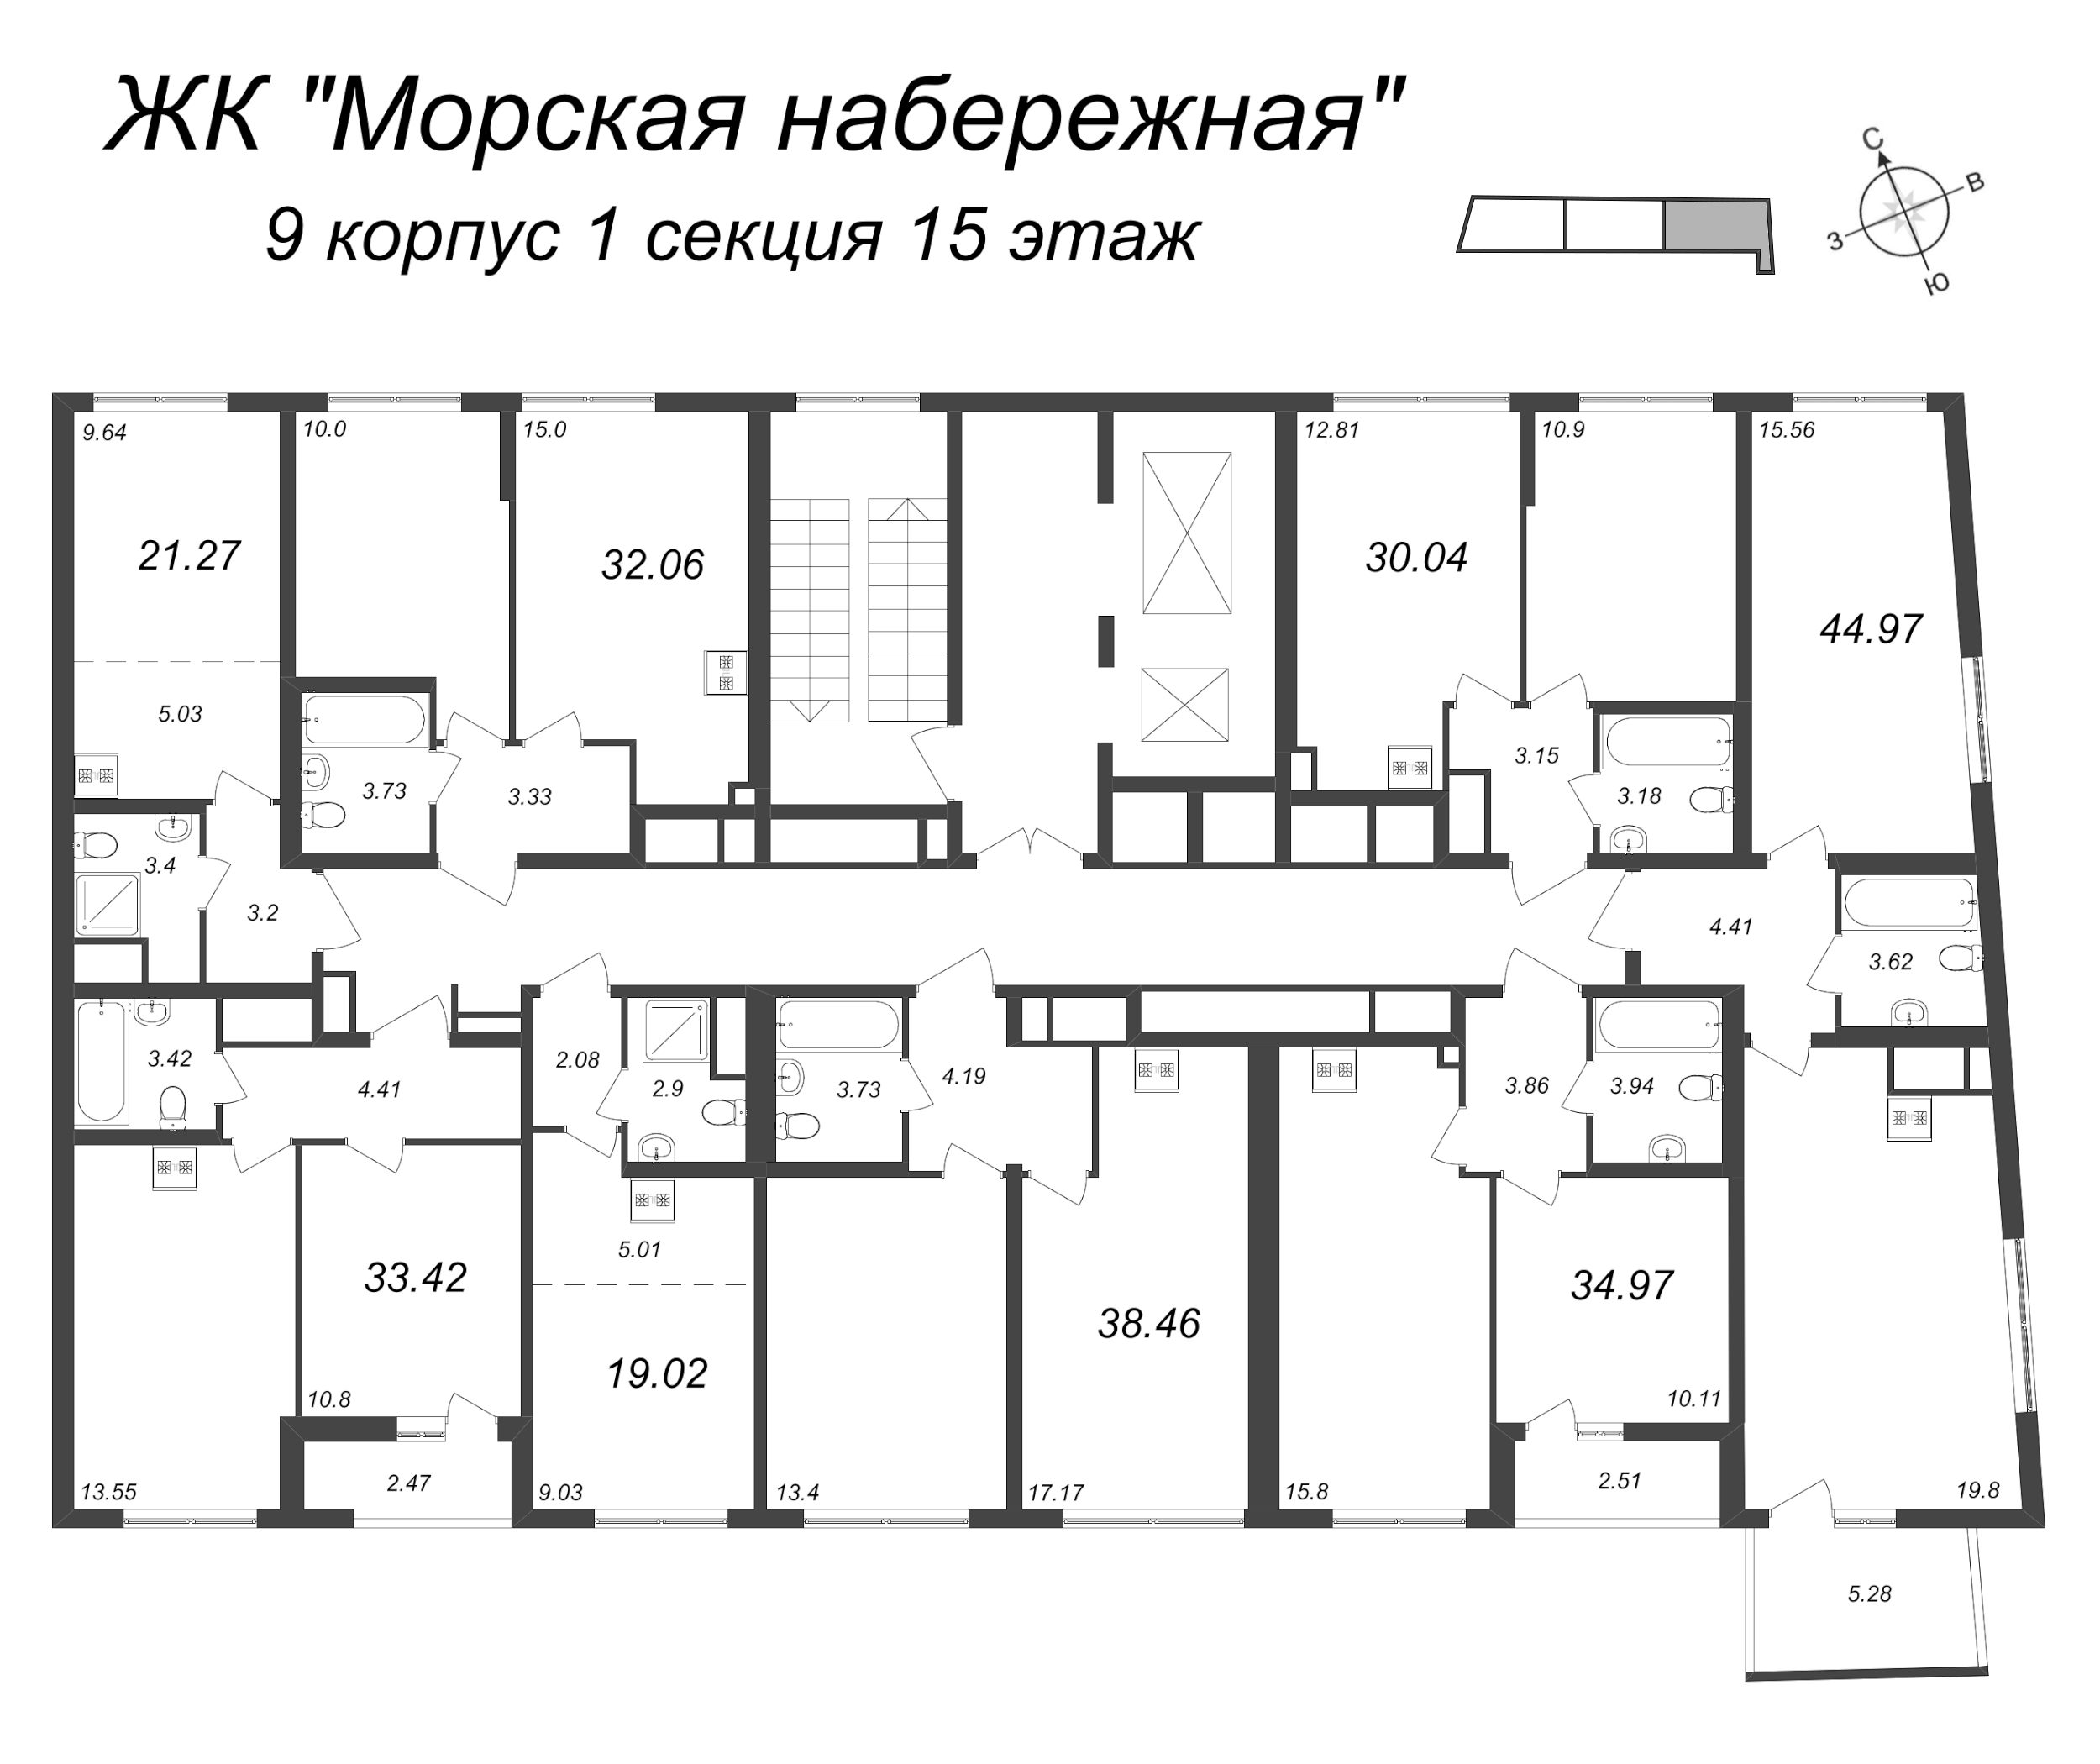 2-комнатная (Евро) квартира, 32.06 м² - планировка этажа